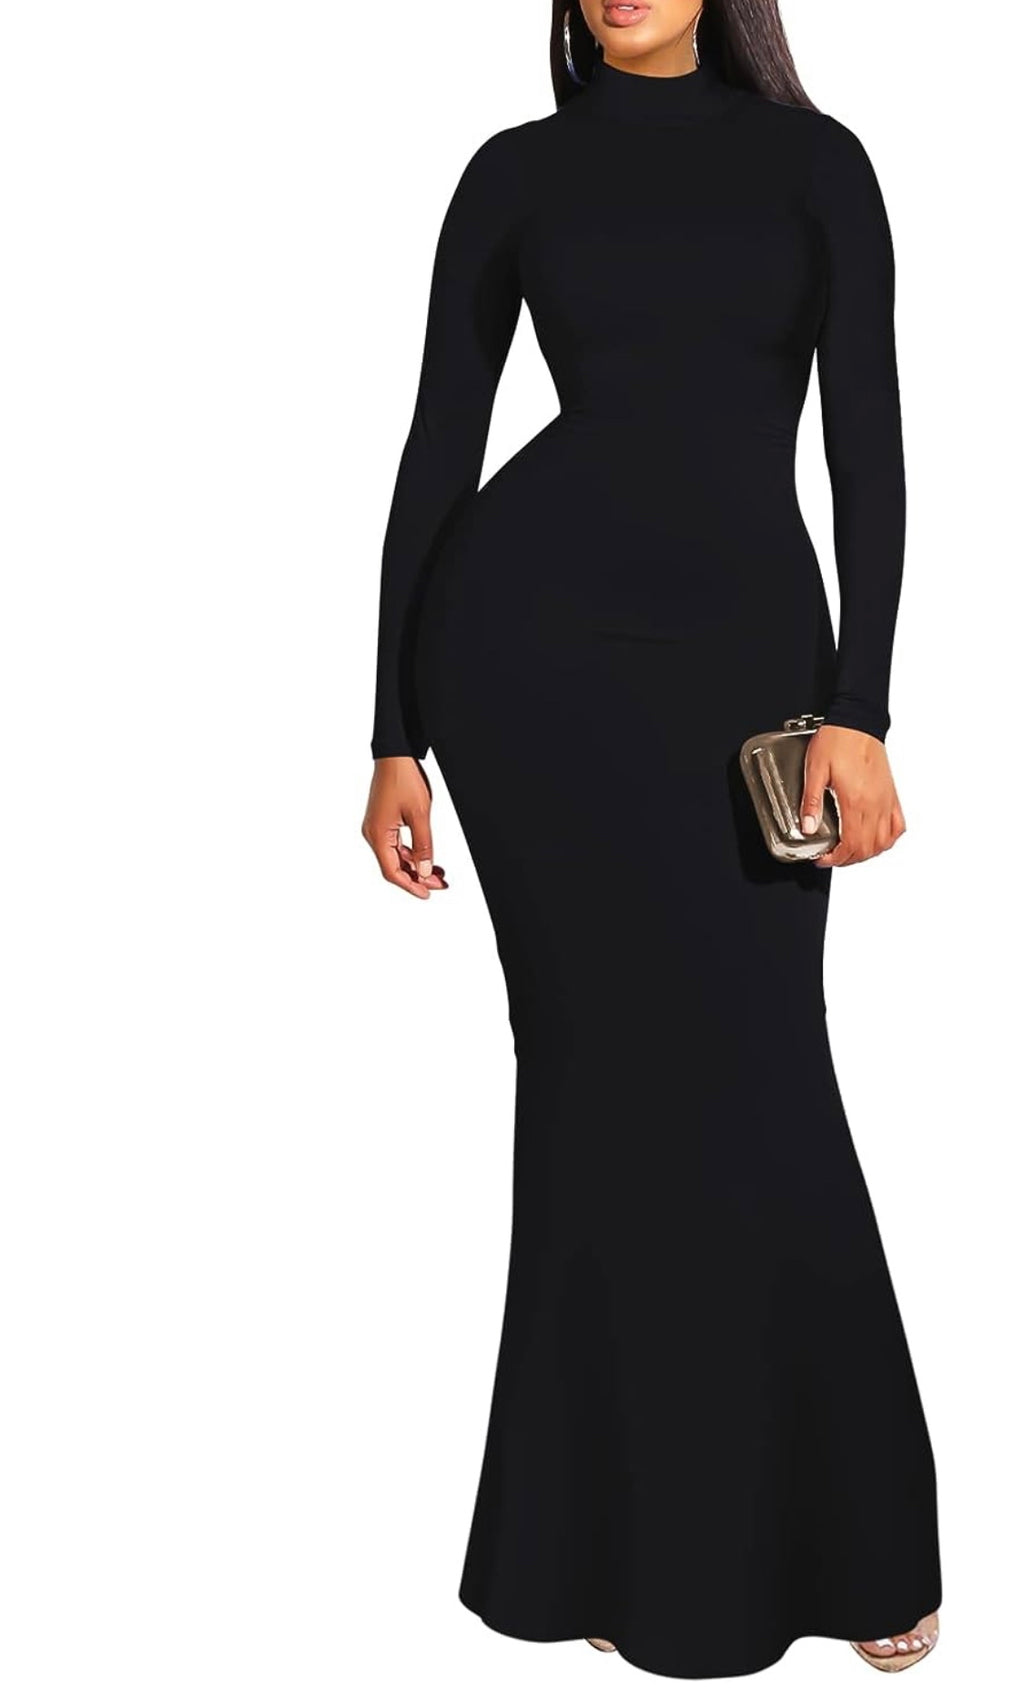 New arrival, long sleeve, black body dress!￼